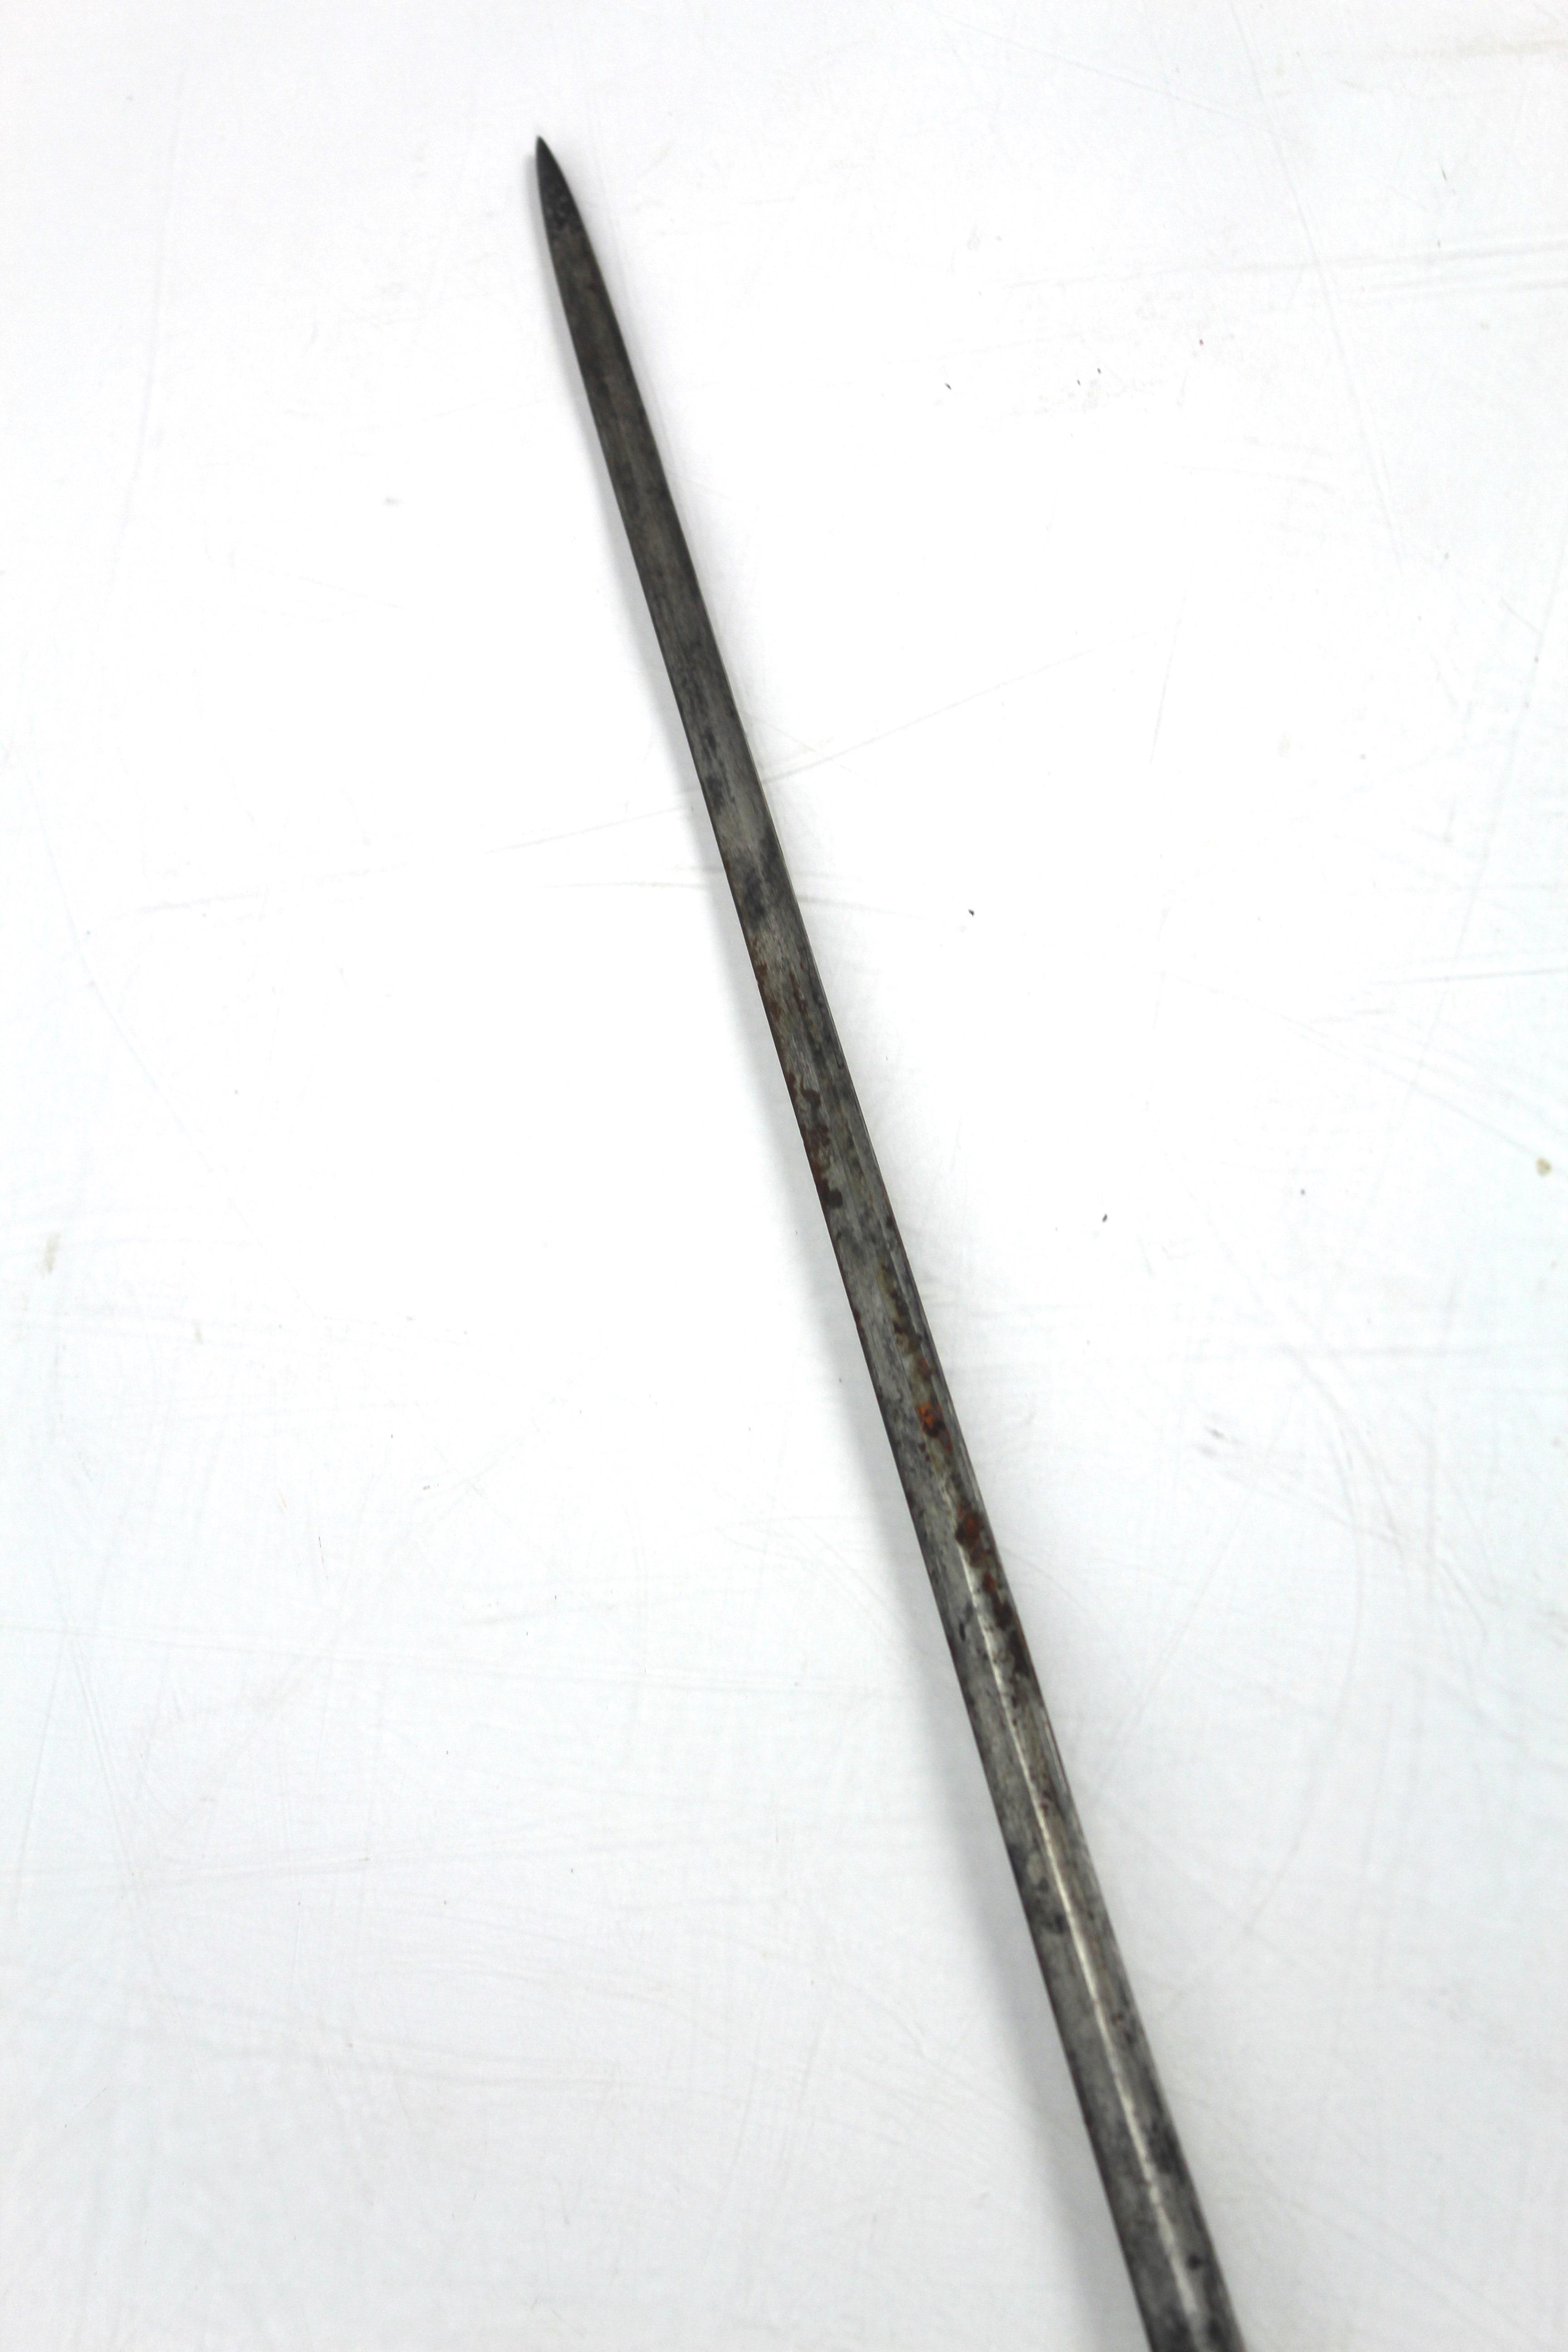 A rustic walking sword stick - Image 6 of 12